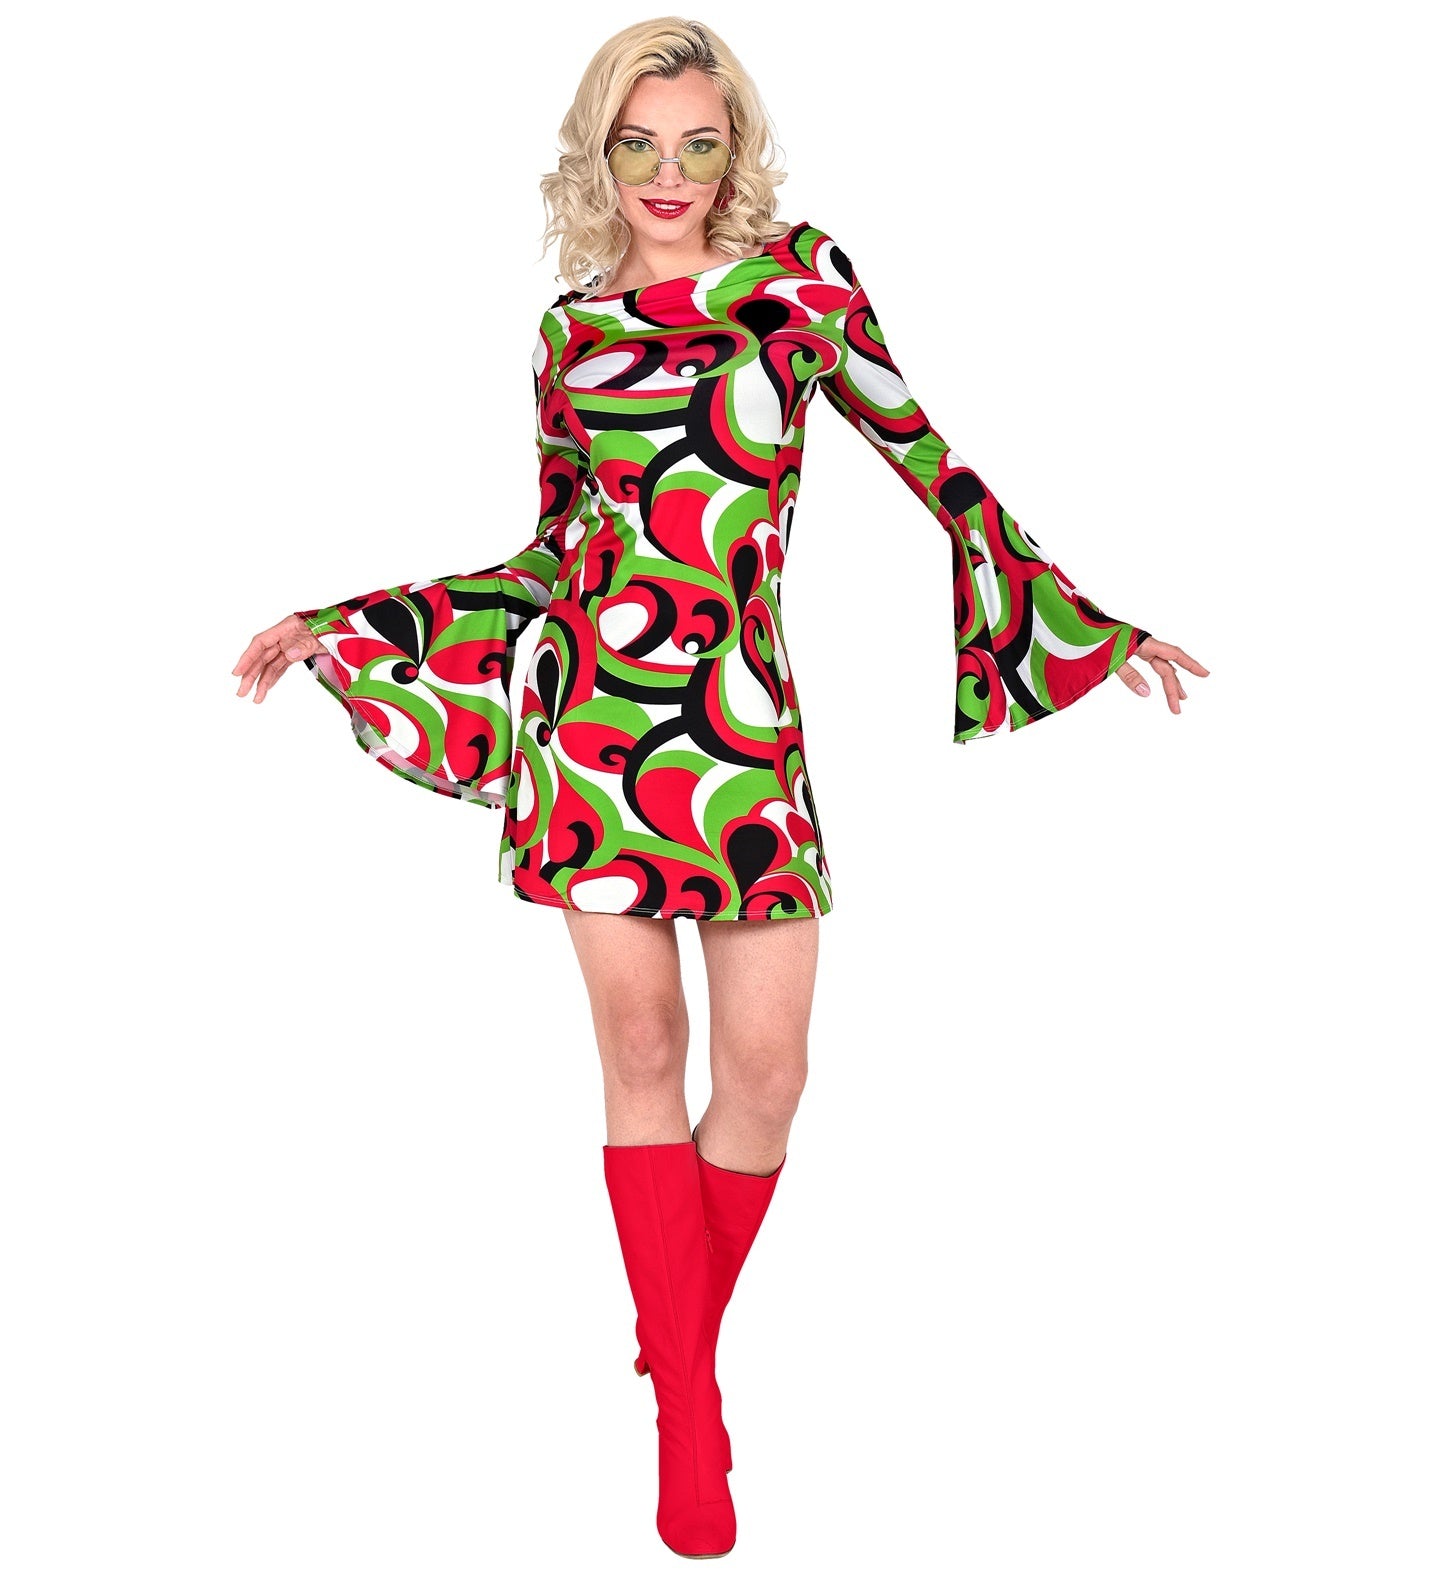 Widmann - Hippie Kostuum - Miss Seventies Jurk Vrouw - rood,groen - Medium - Carnavalskleding - Verkleedkleding